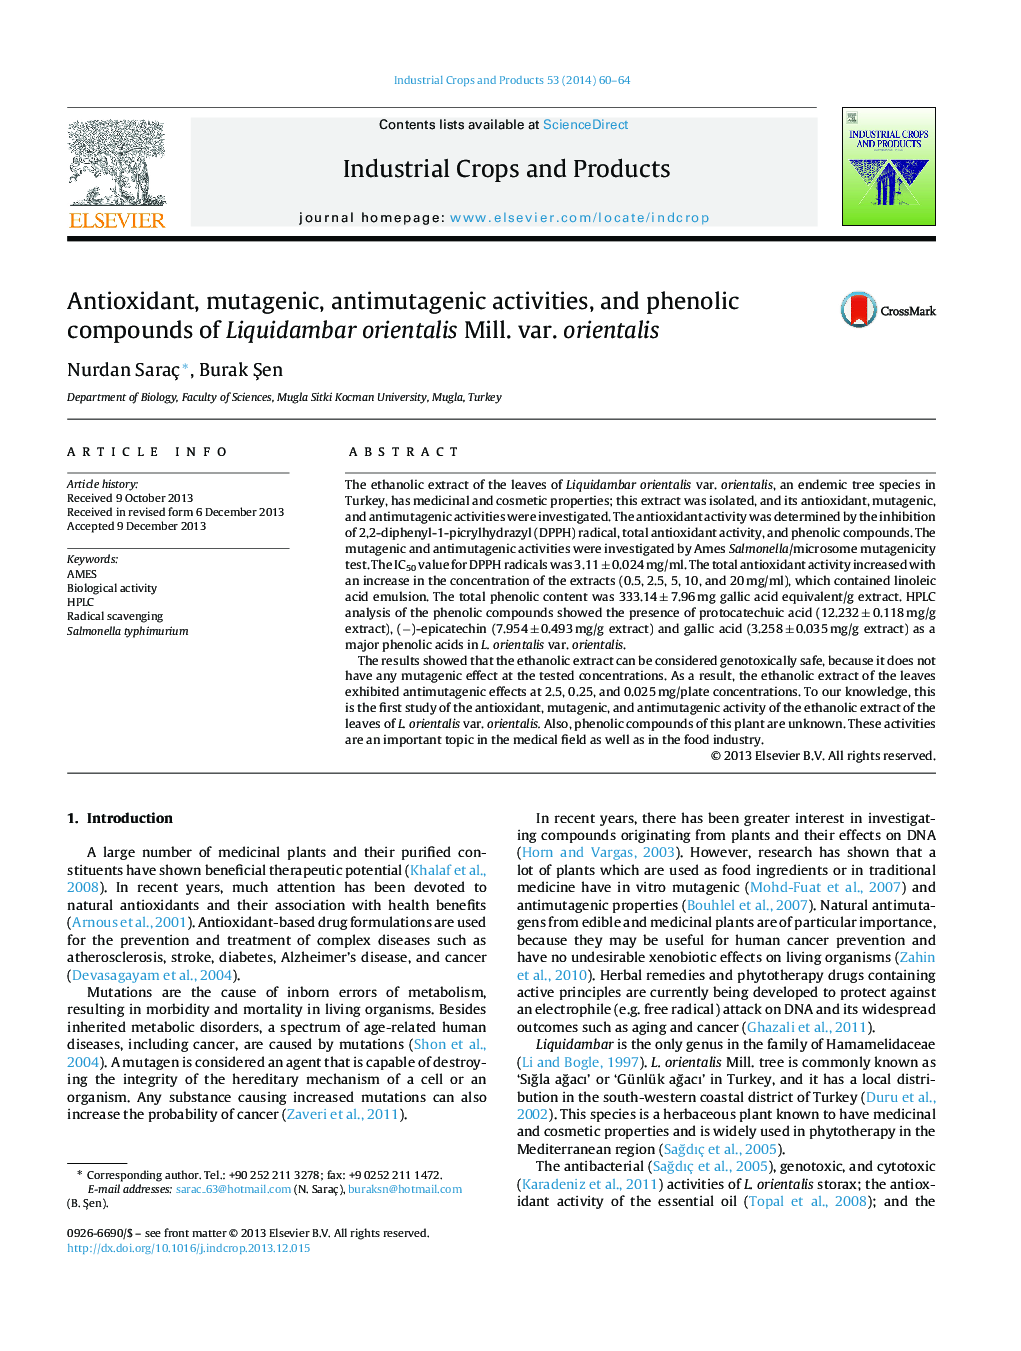 Antioxidant, mutagenic, antimutagenic activities, and phenolic compounds of Liquidambar orientalis Mill. var. orientalis